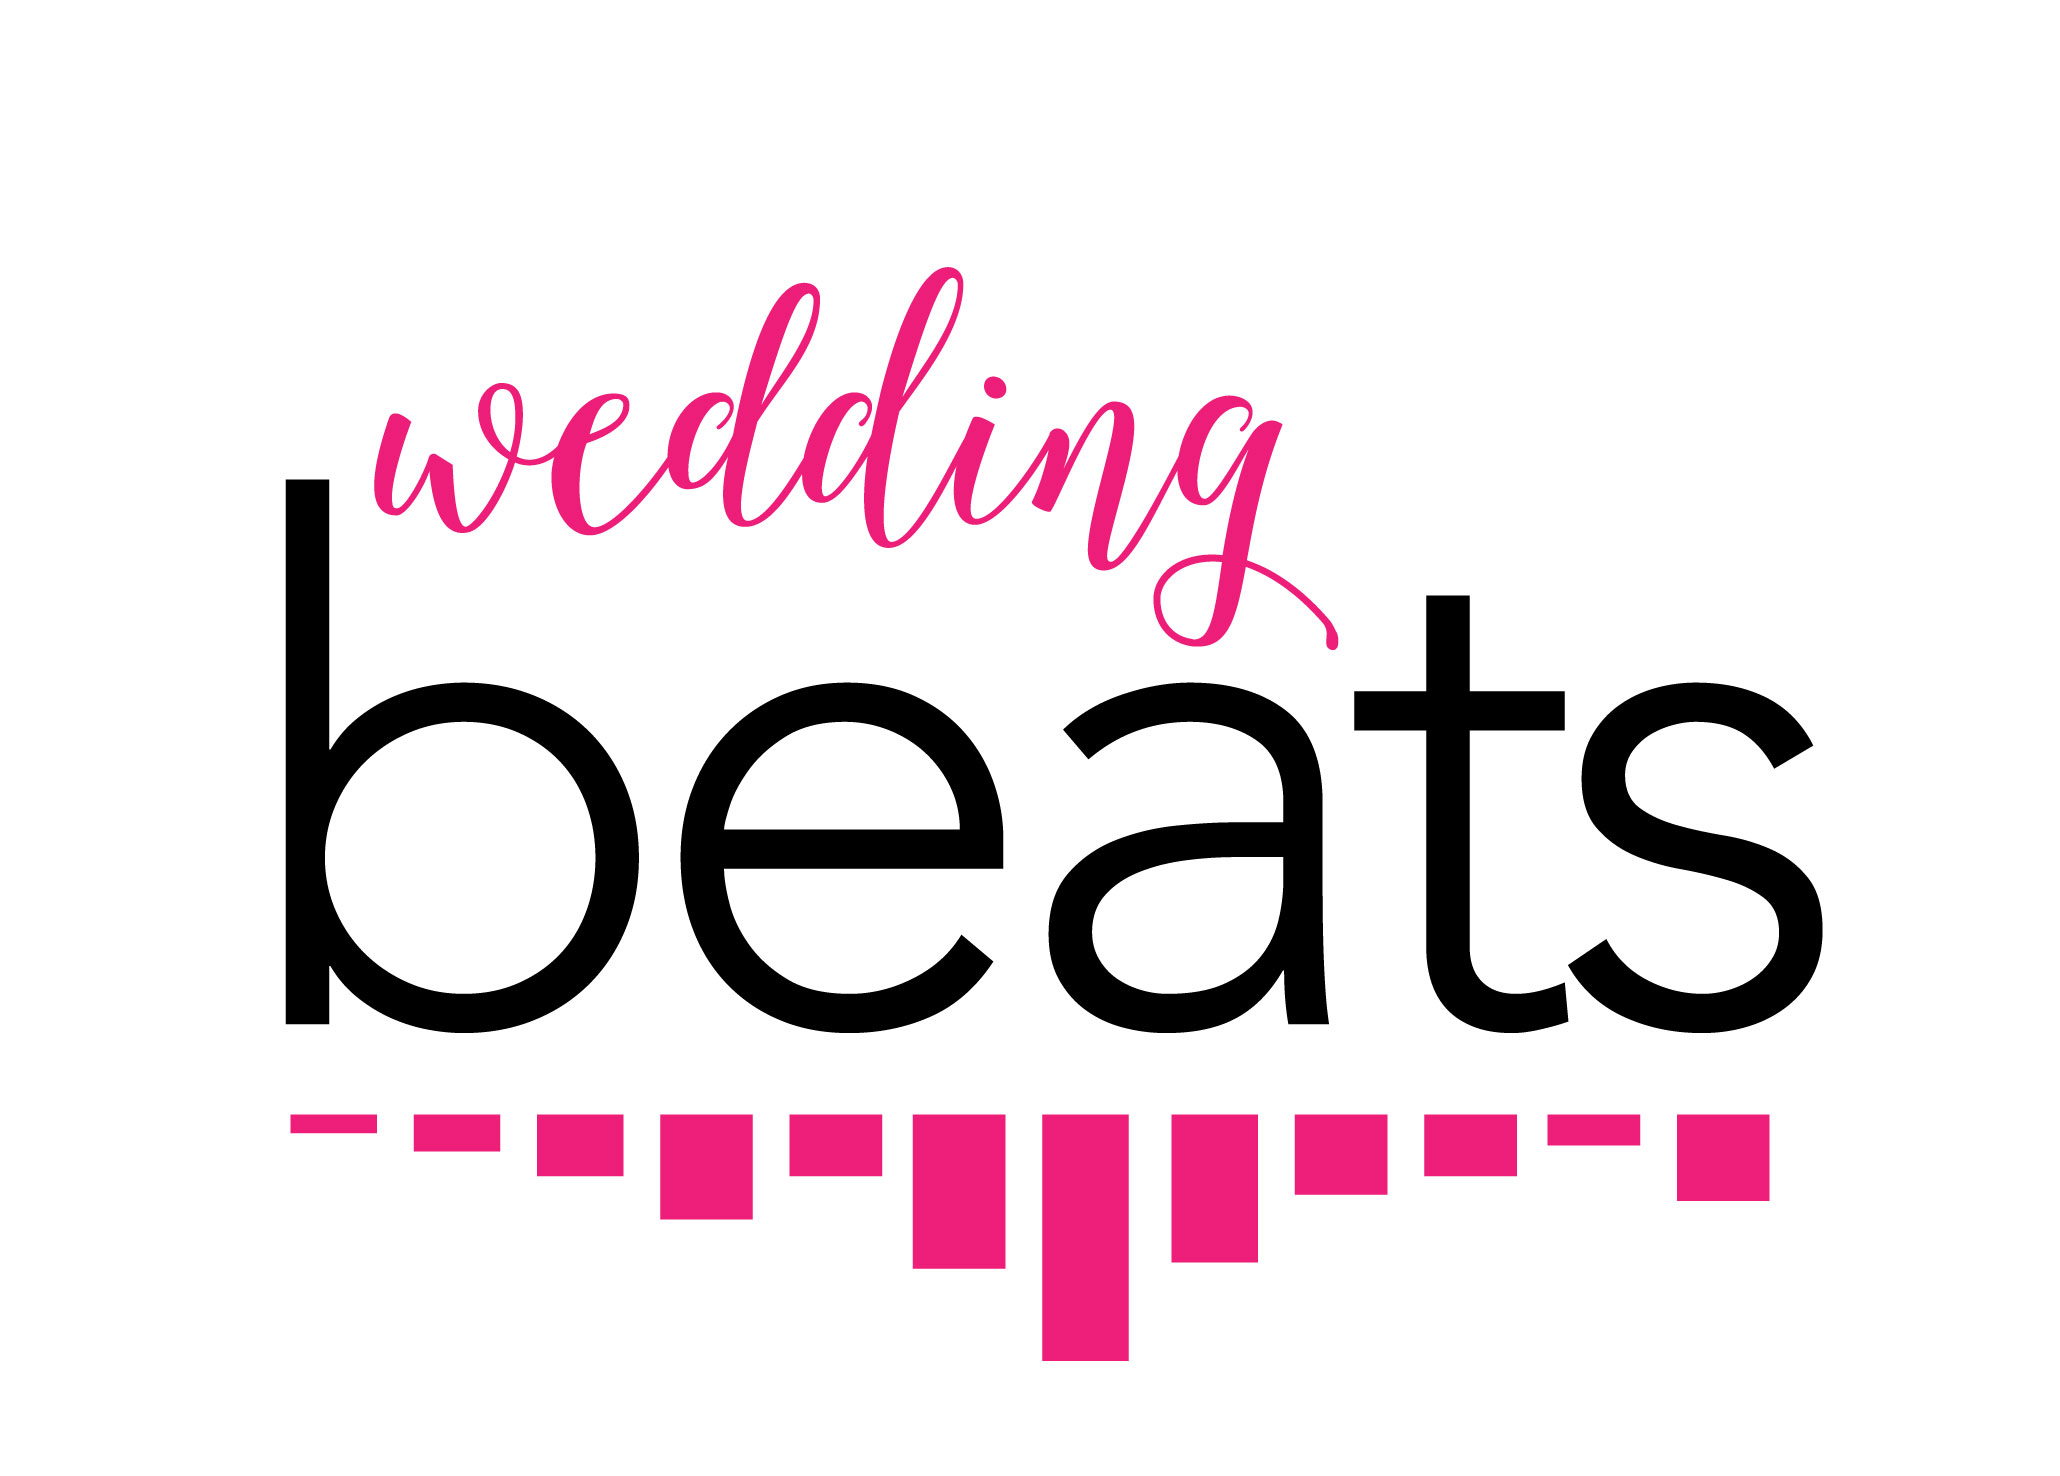 Wedding Beats